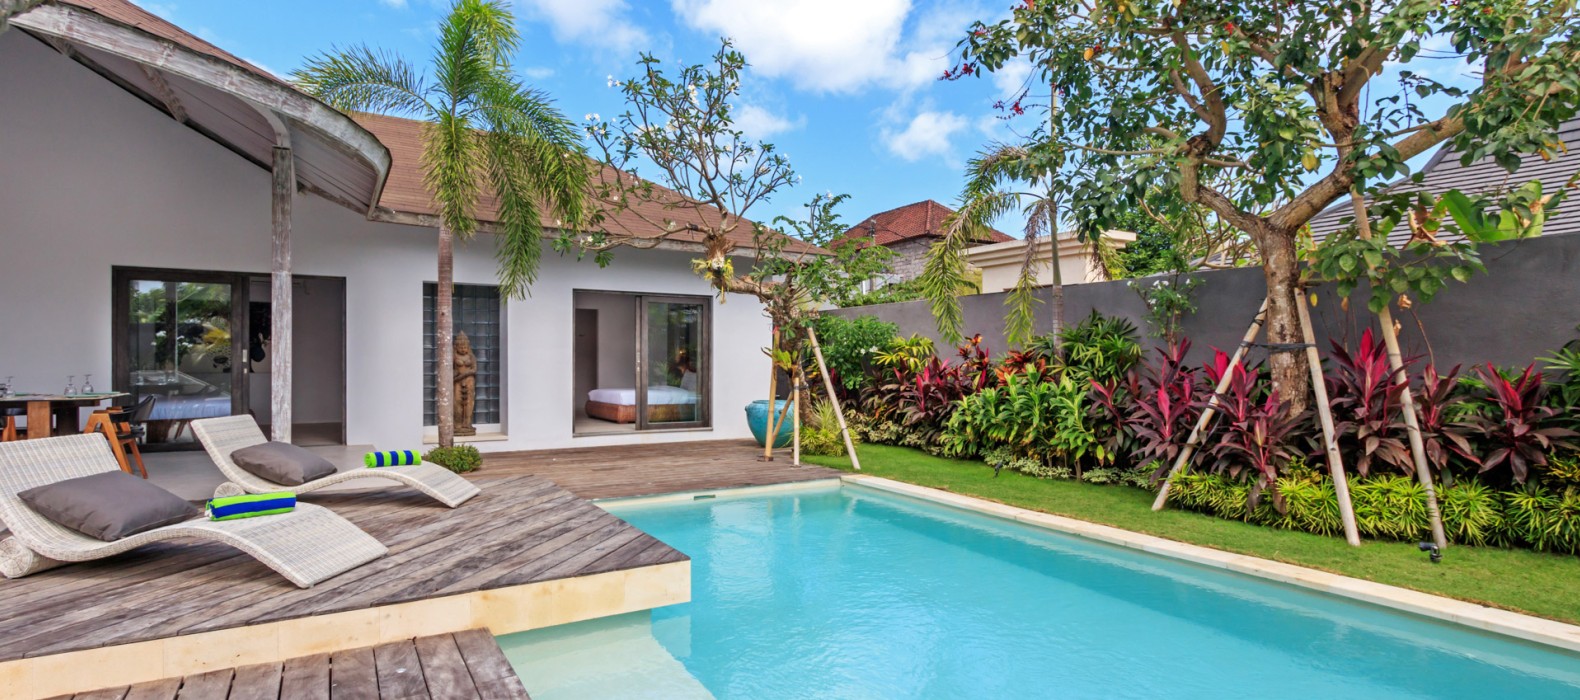 Exterior pool view of Villa Ohana in Bali